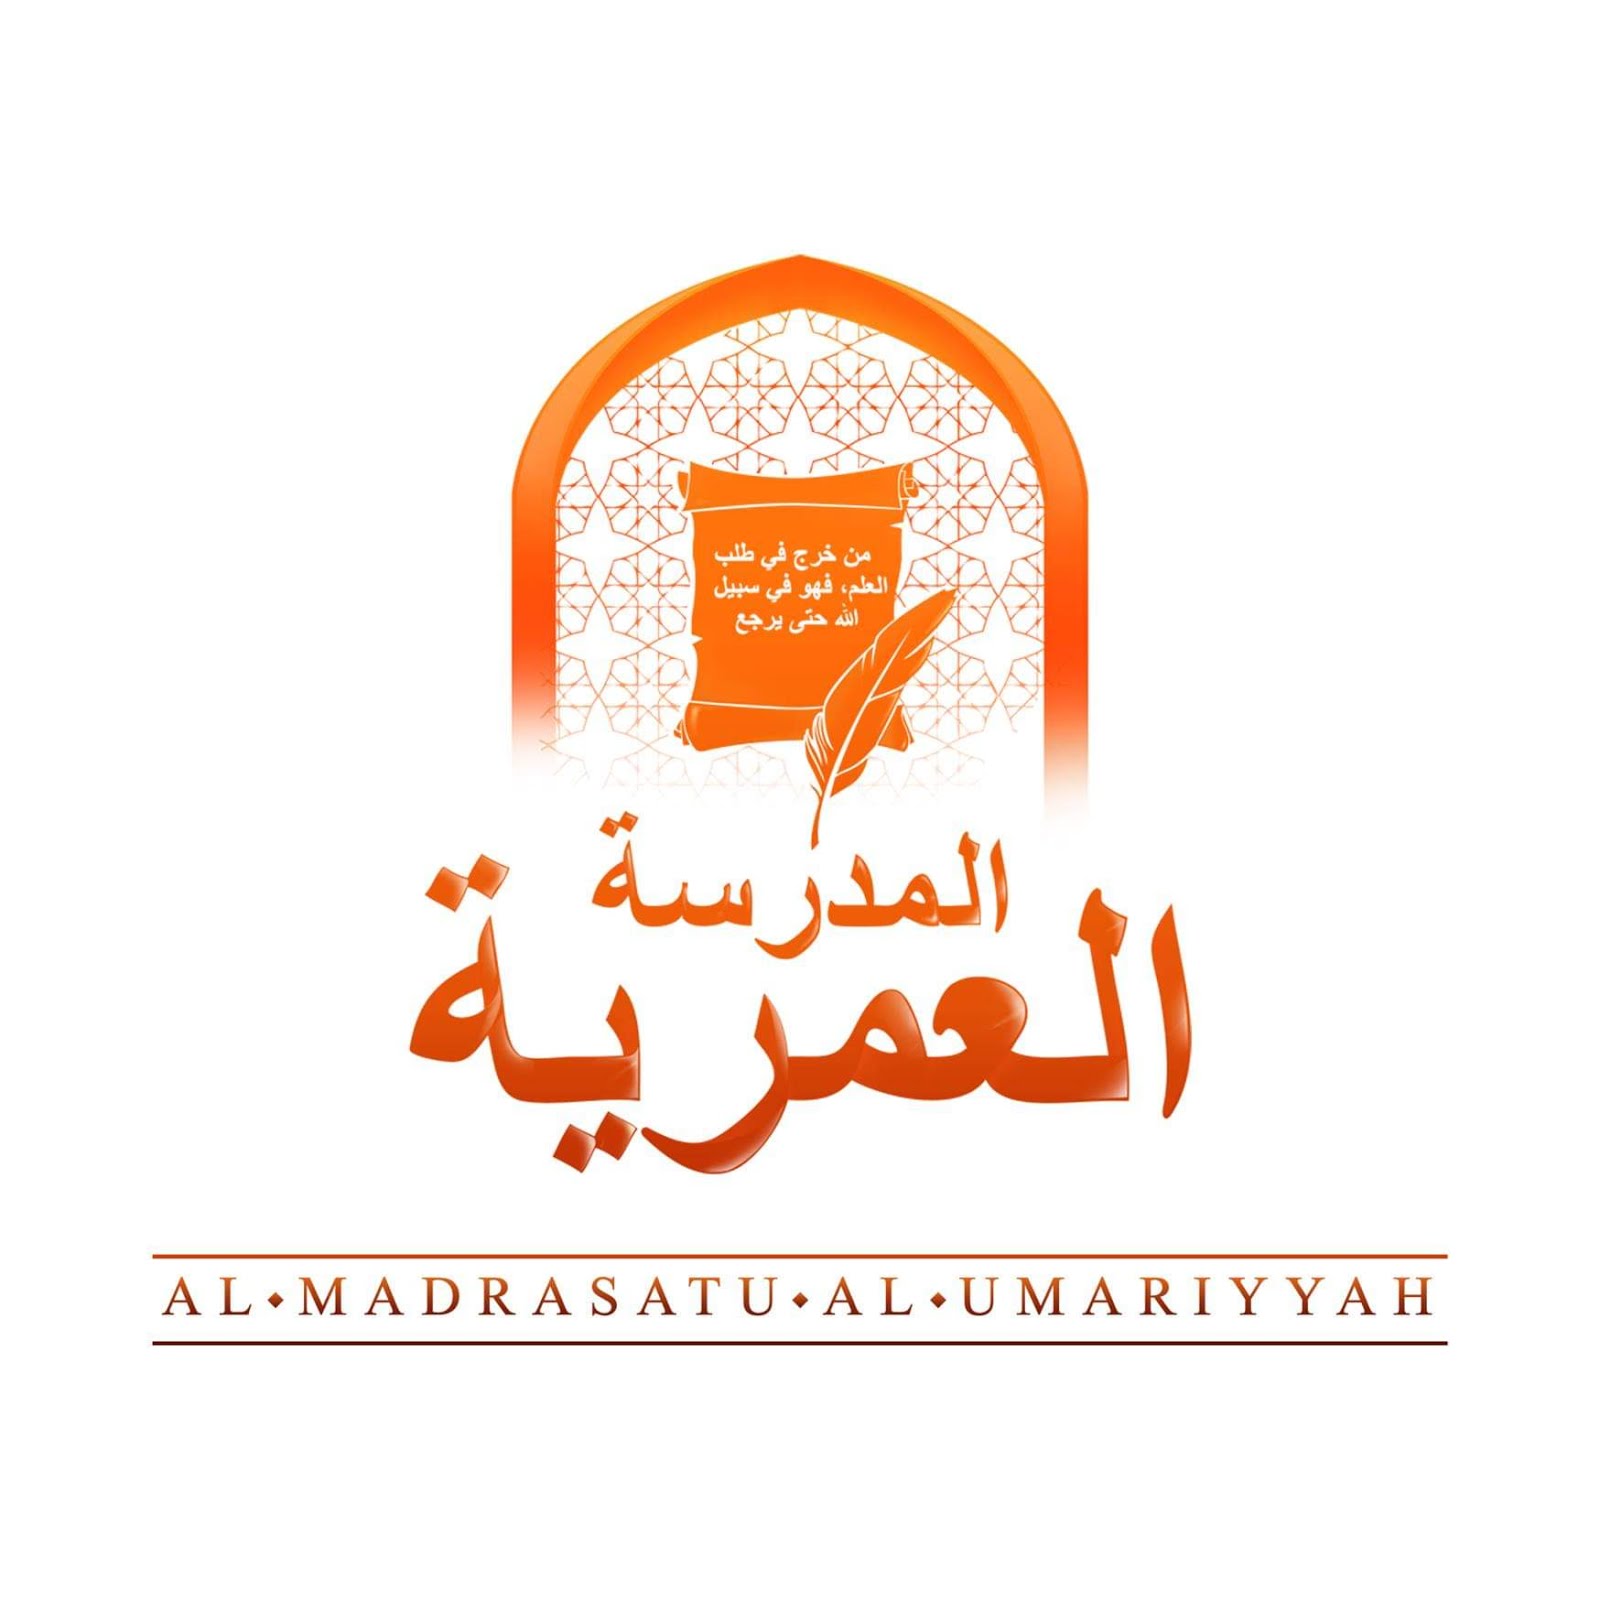 Al-Madrasatu al-Umariyyah